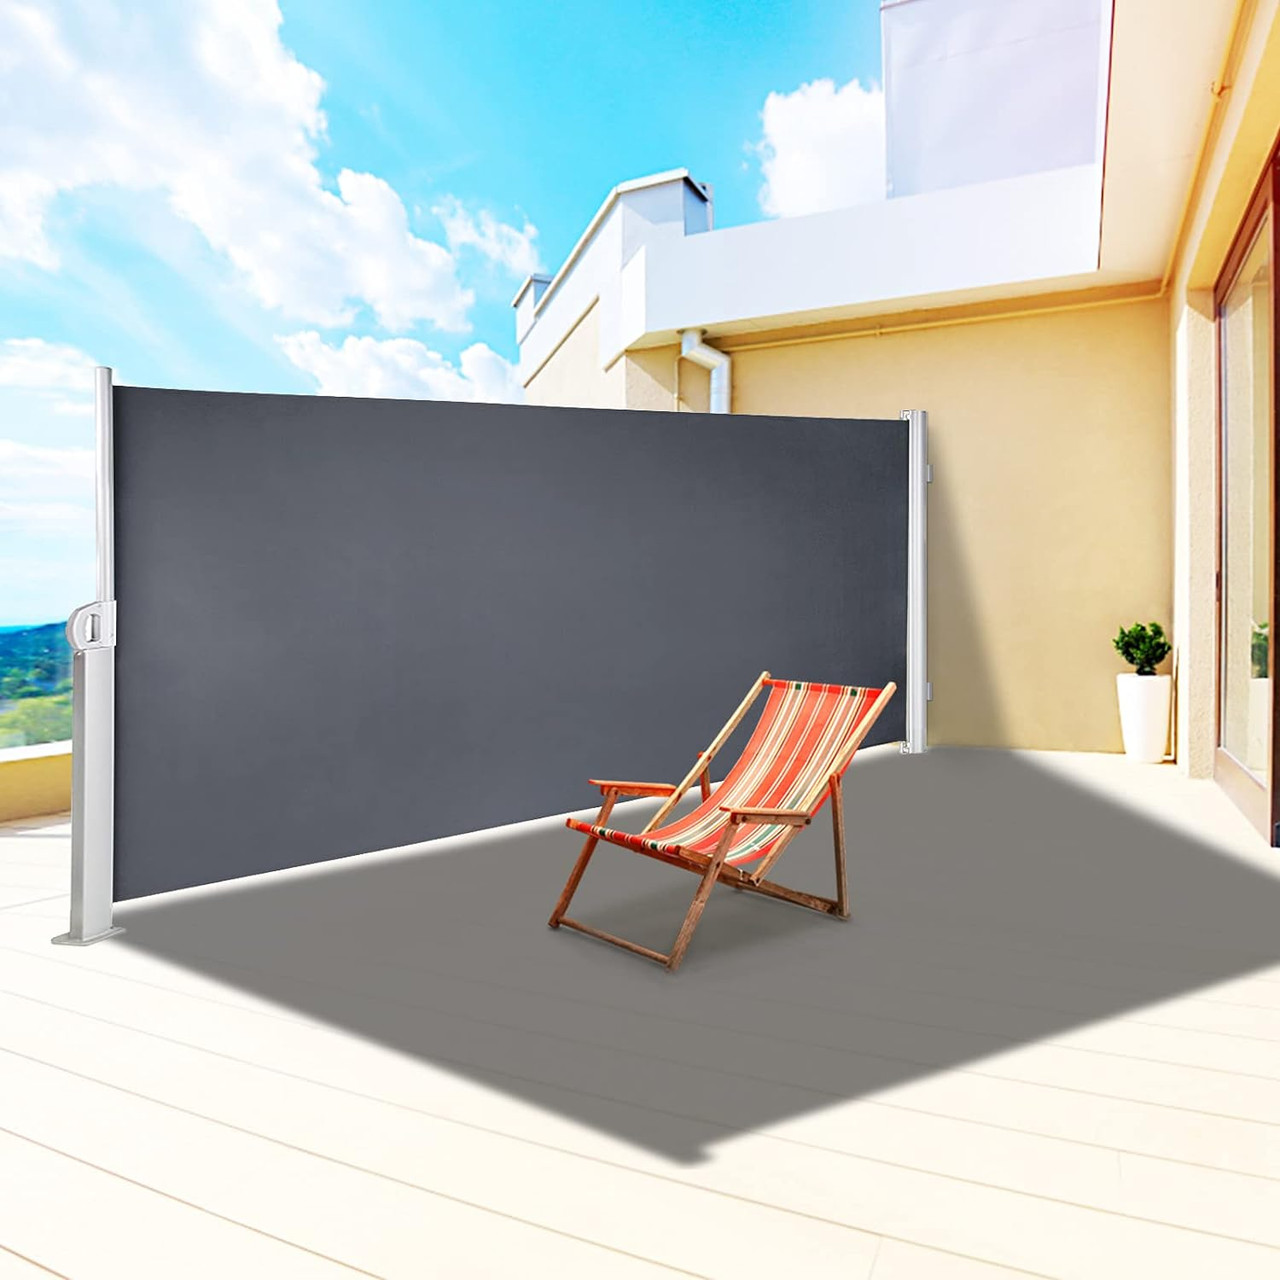 Retractable Side Awning 118" x 71", Retractable Patio Screen Waterproof, Retractable Room Divider Black for Privacy, Garden, Outdoor, Patio and